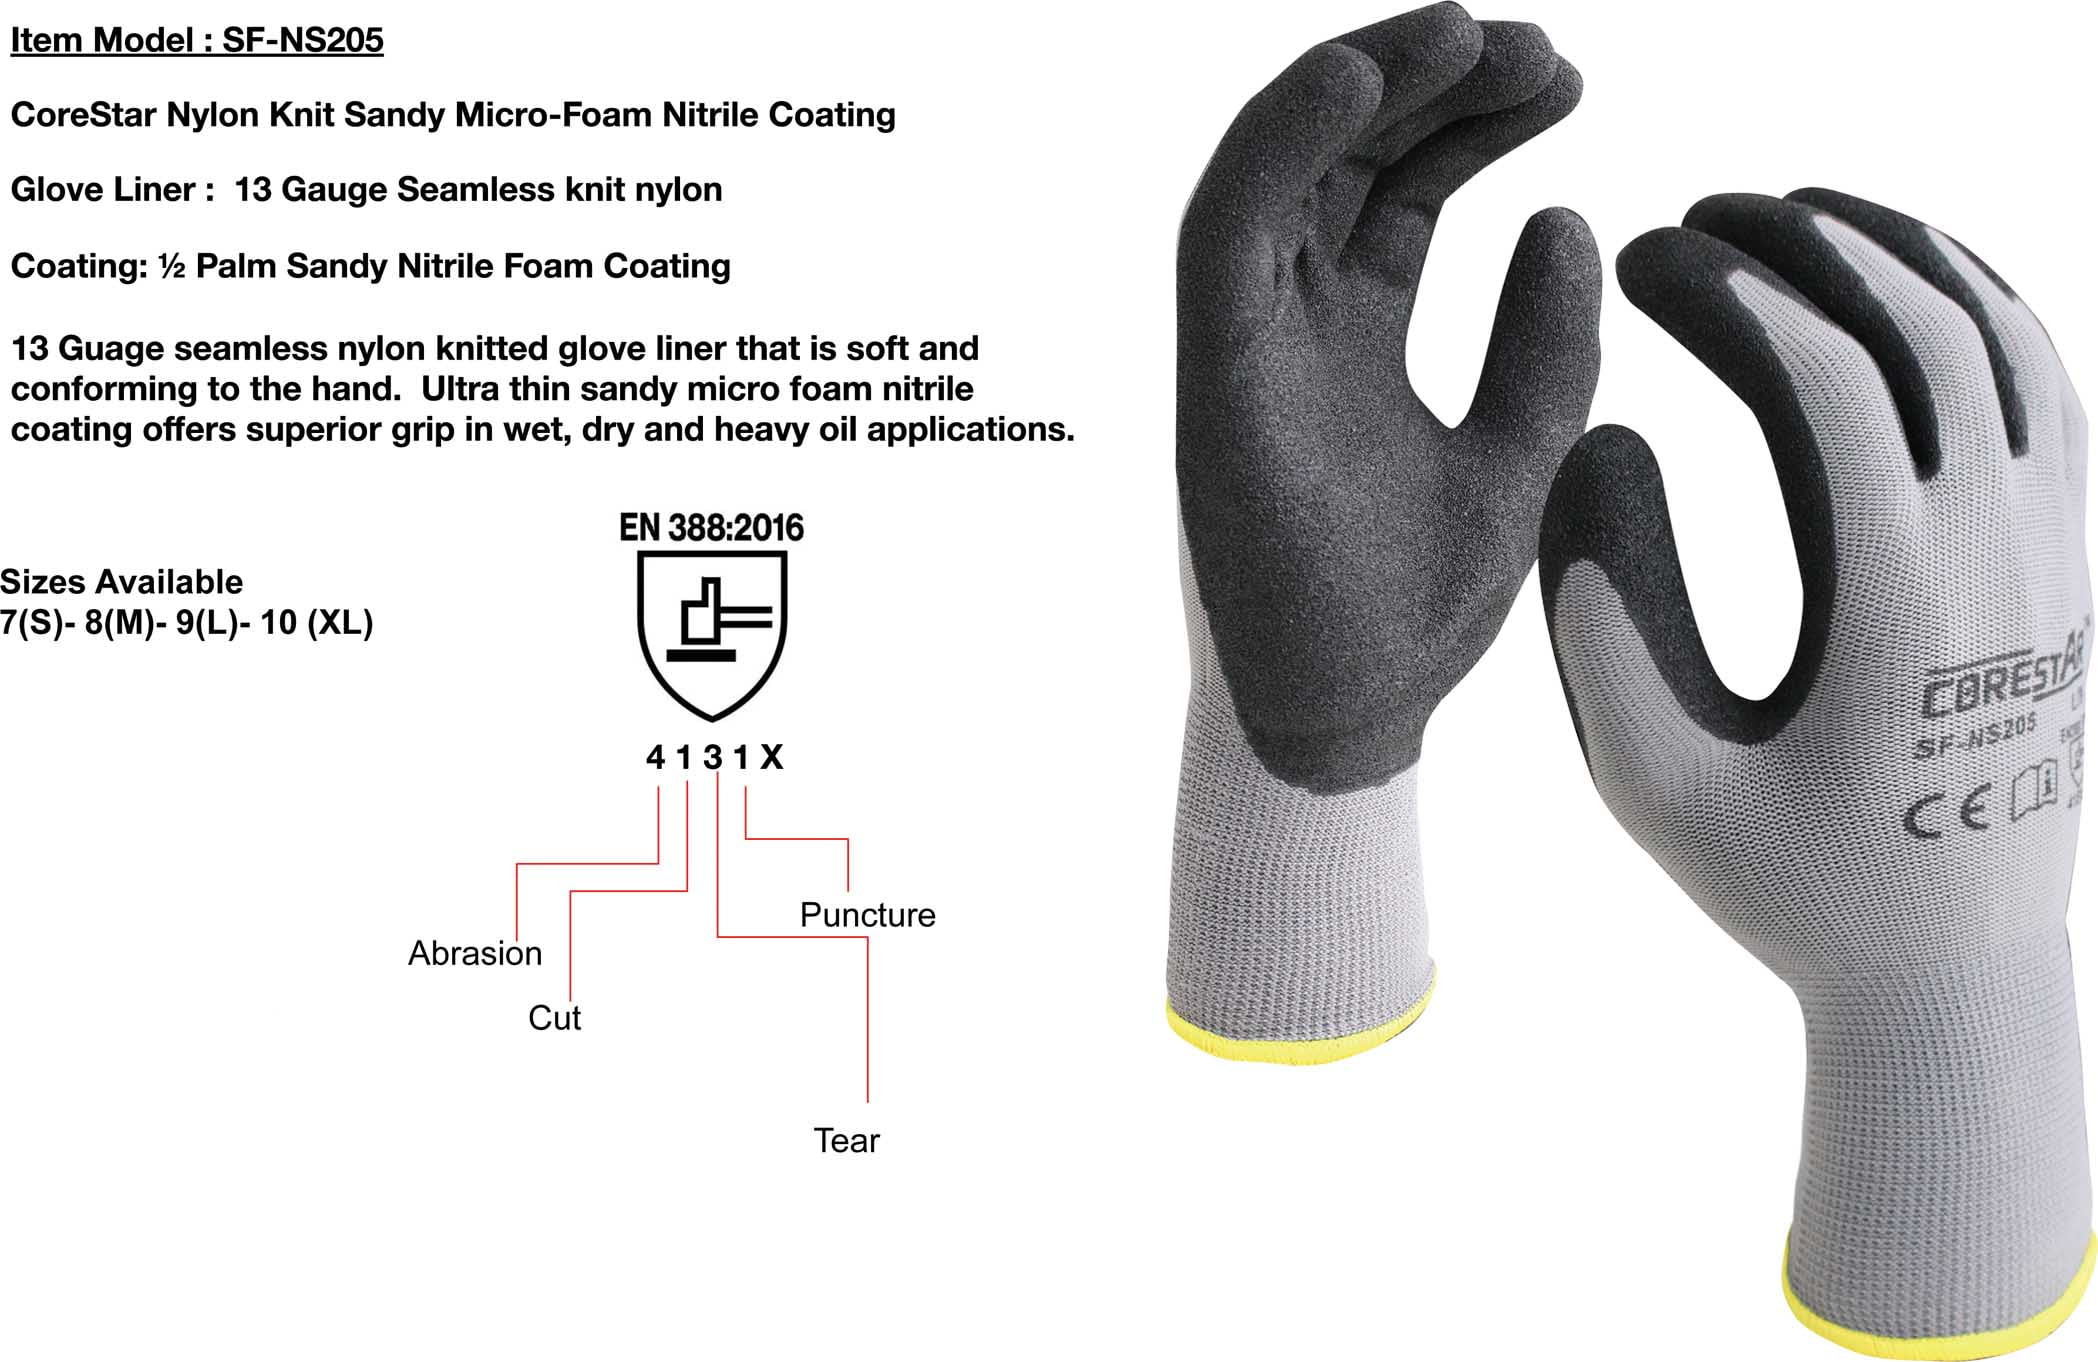 Nylon Knit Sandy Micro Foam Nitrile Coating Multi Functional Gloves 1 Pair Walmart Com Walmart Com